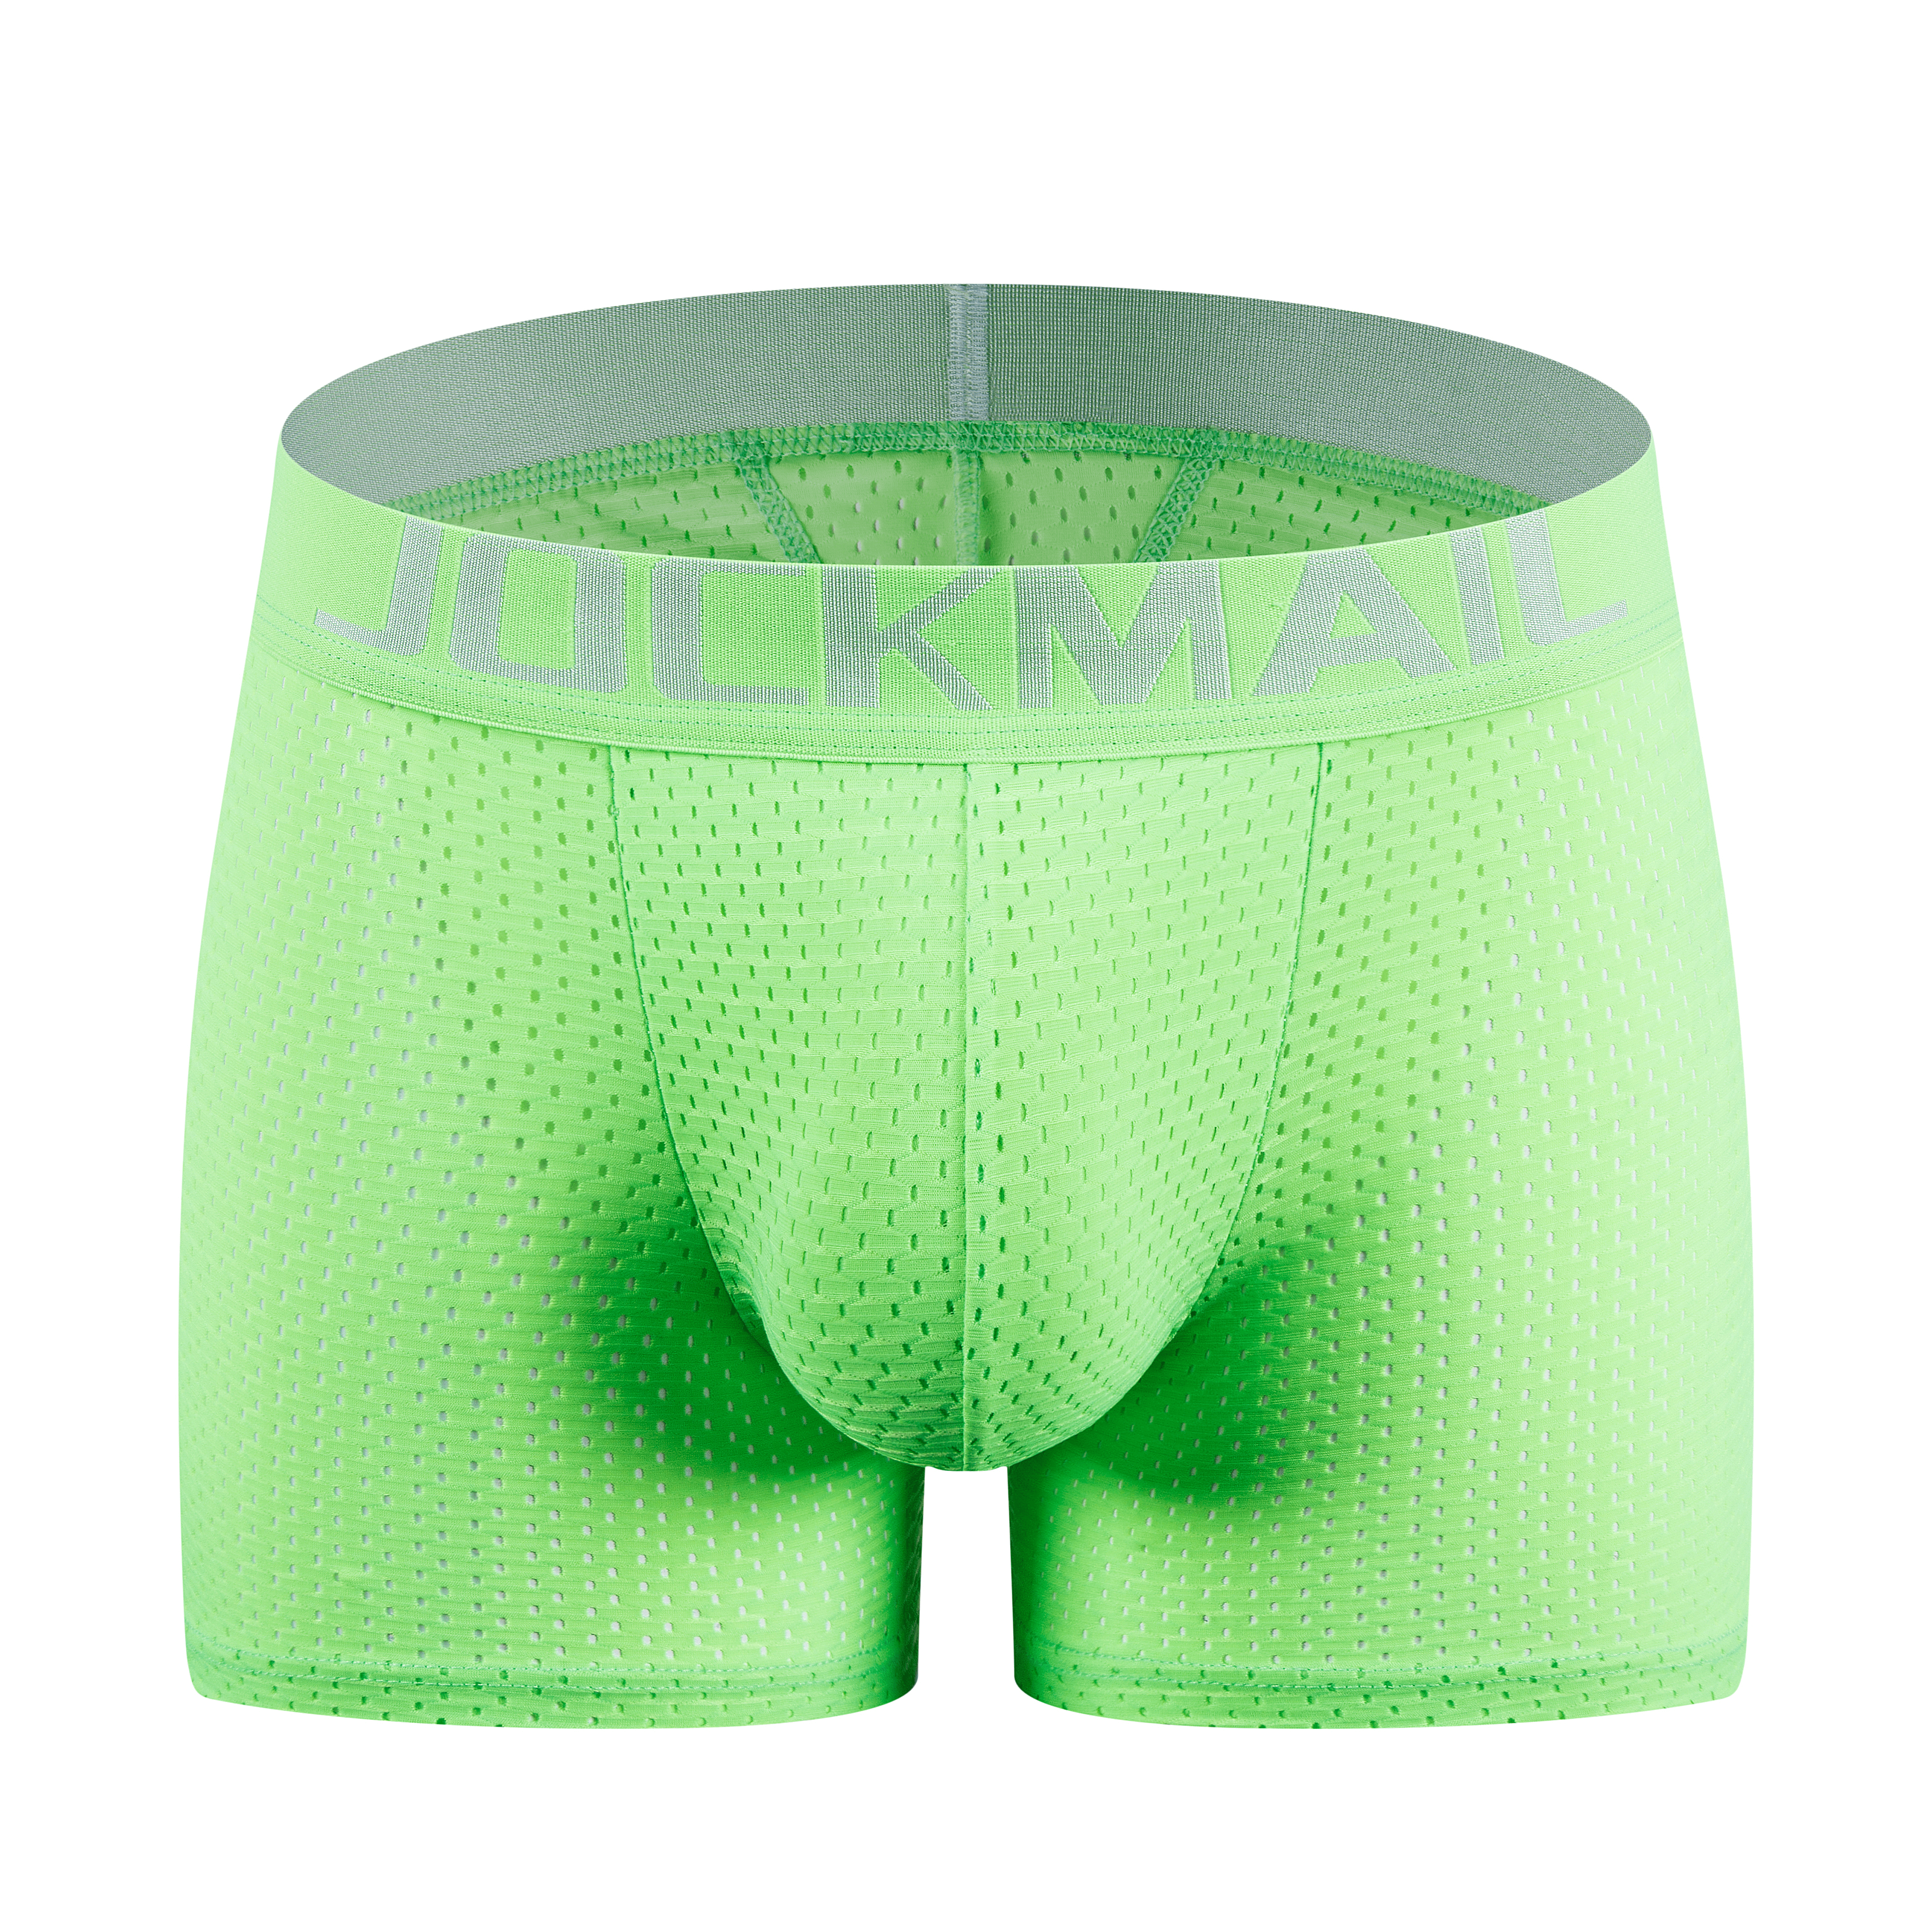 JOCKMAIL Men's 3D Padded Enhance Sexy Underwear Push Up Butt